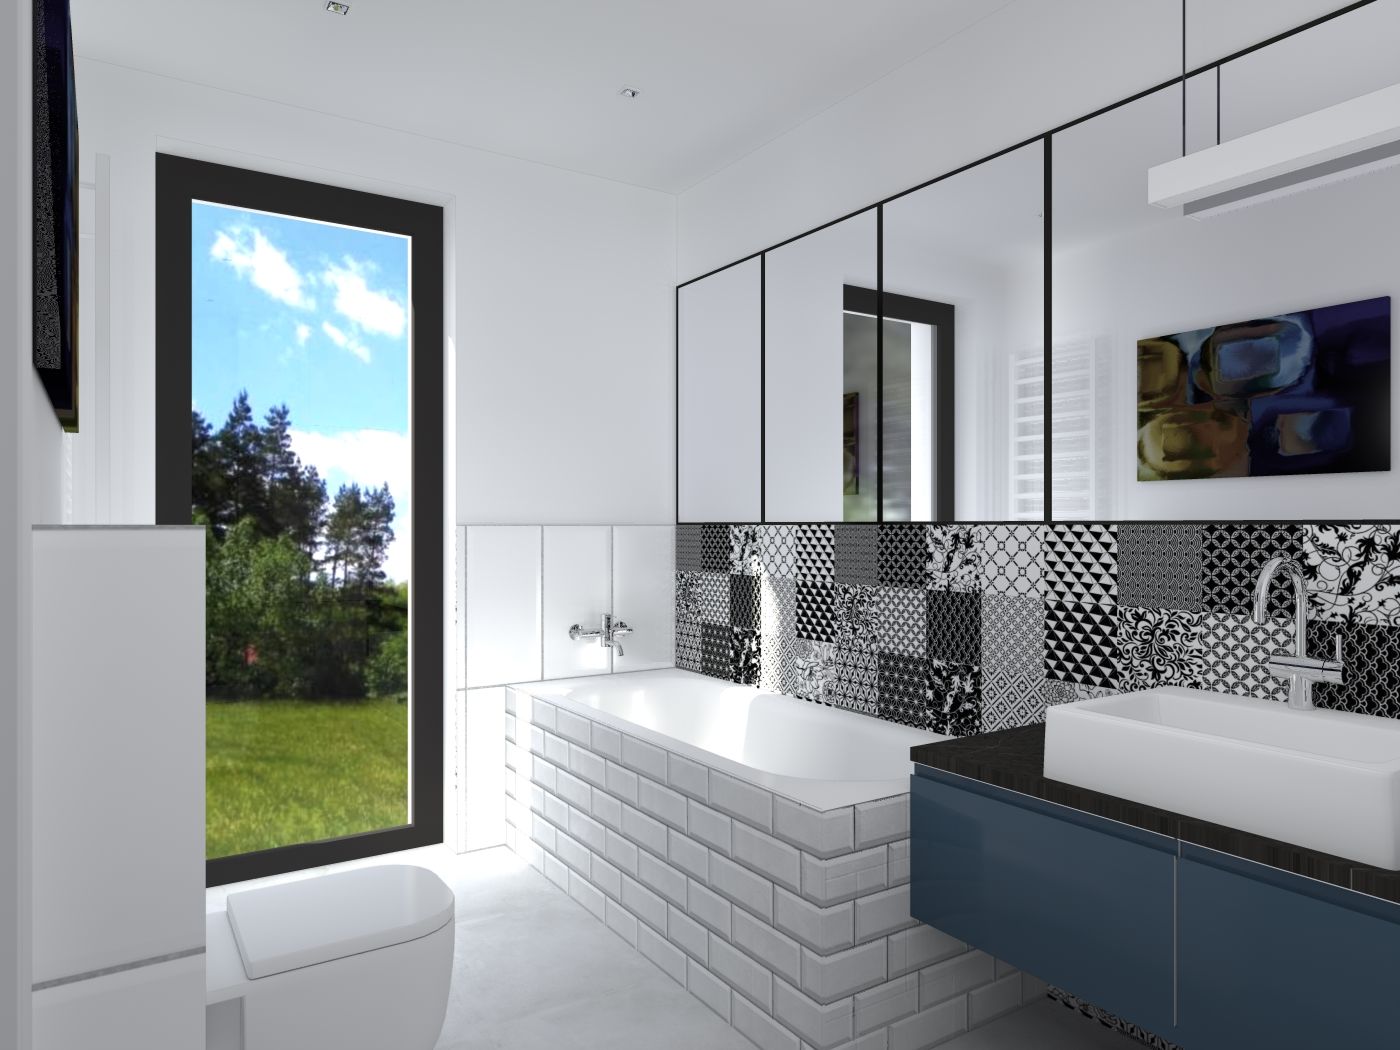 Bathroom BOOM studio patchwork,interior design,bathroom,bath,sink,toilet